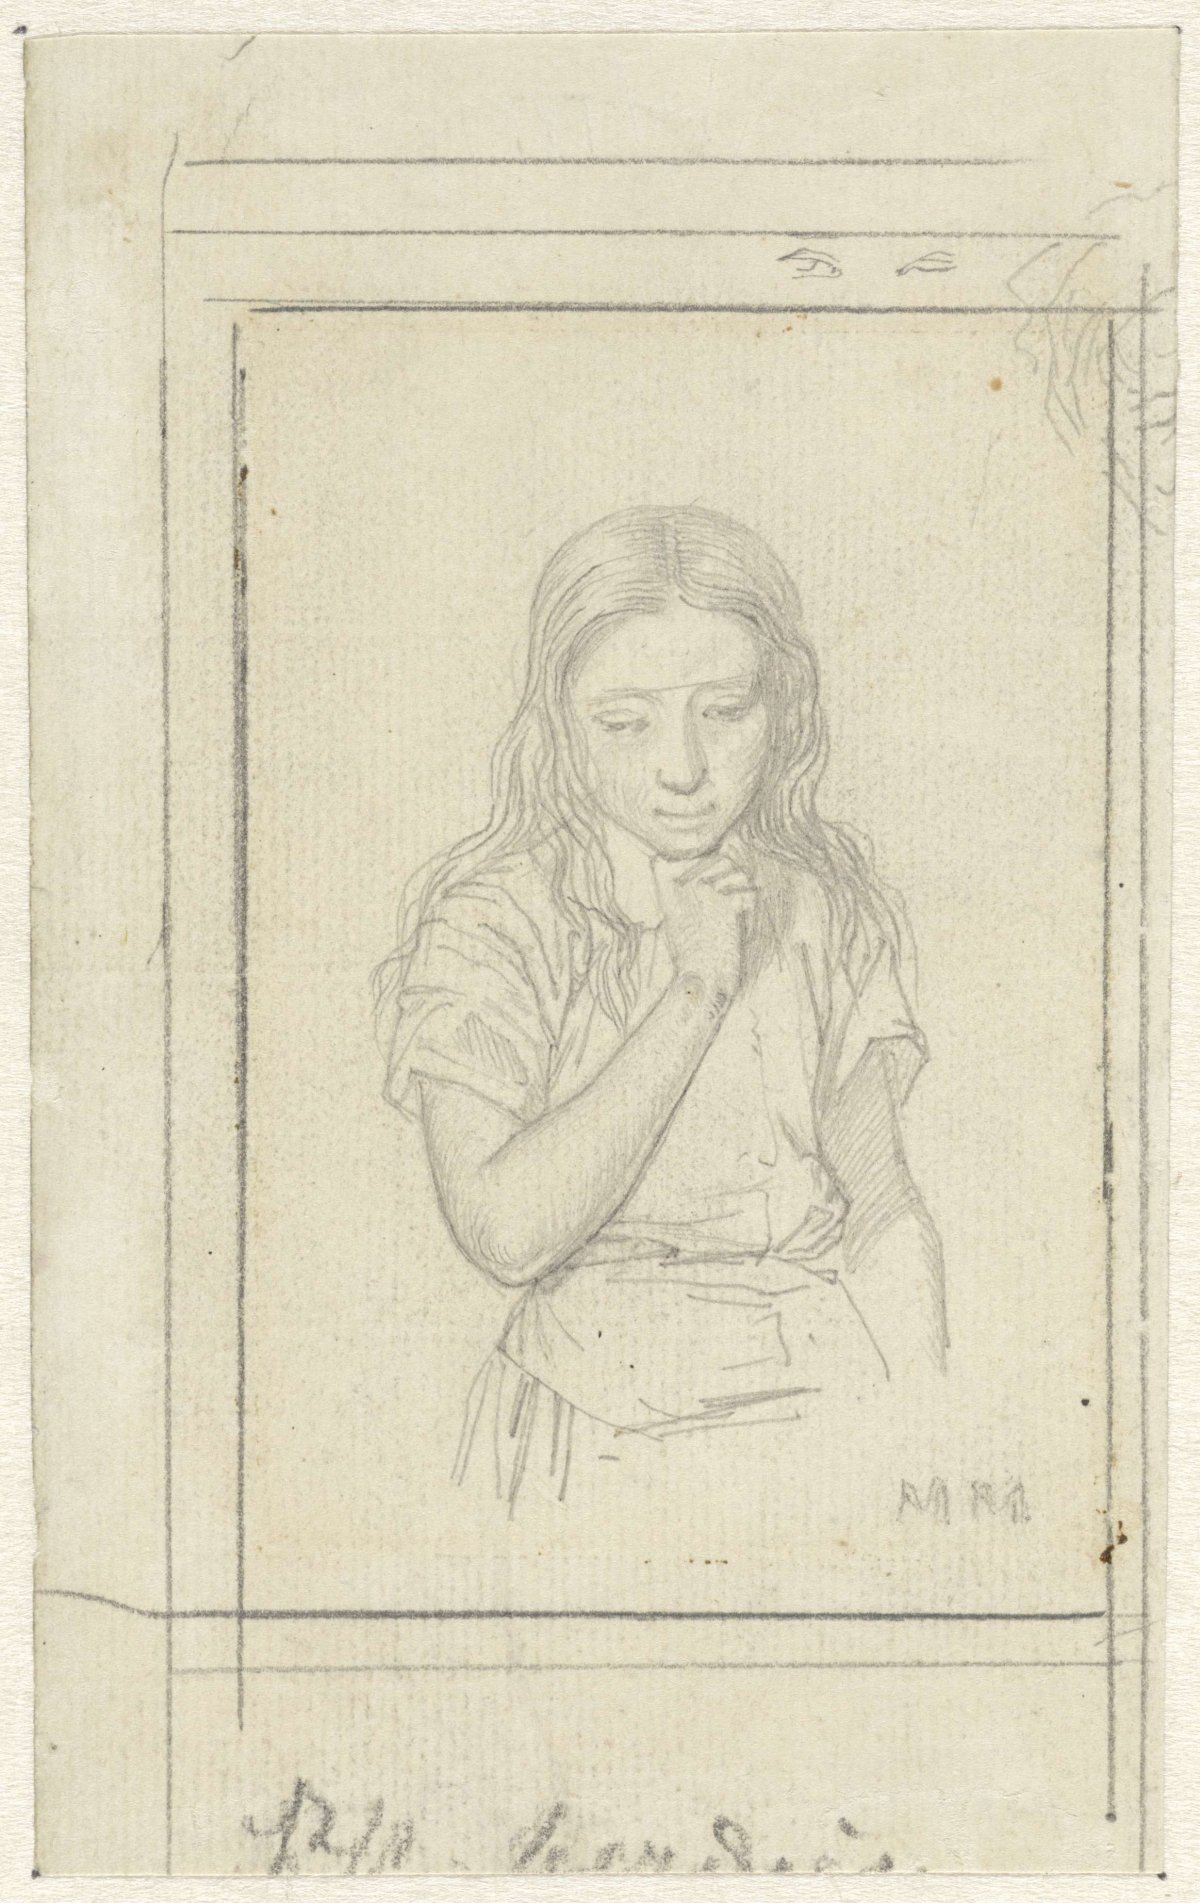 Pensive girl, Matthijs Maris, 1849 - 1917